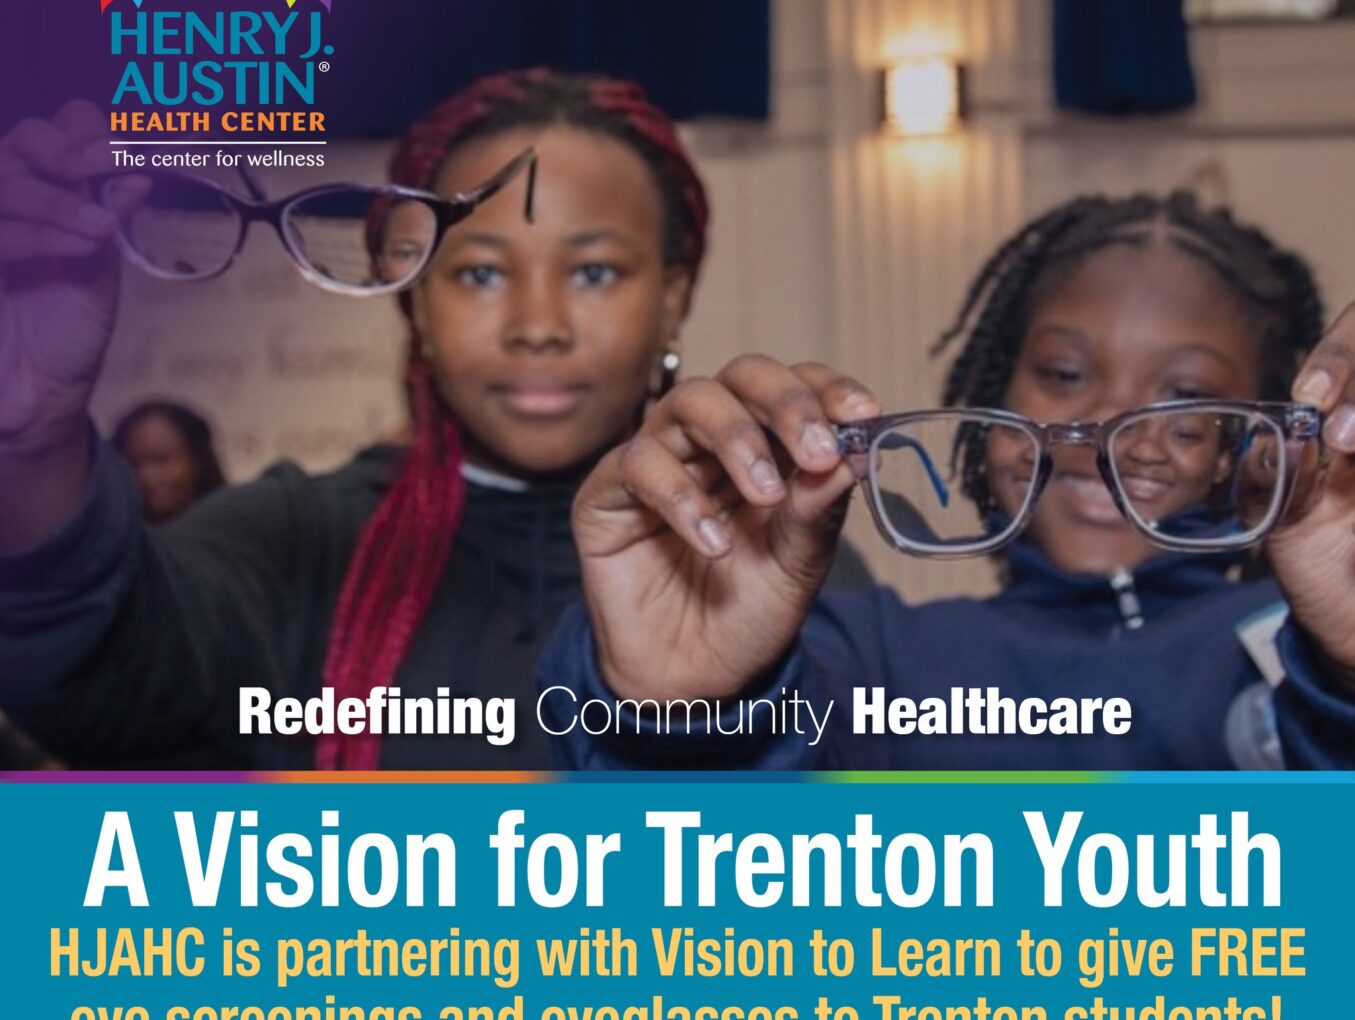 Henry J. Austin Health Center Offers Gift of Sight for Trenton Youth